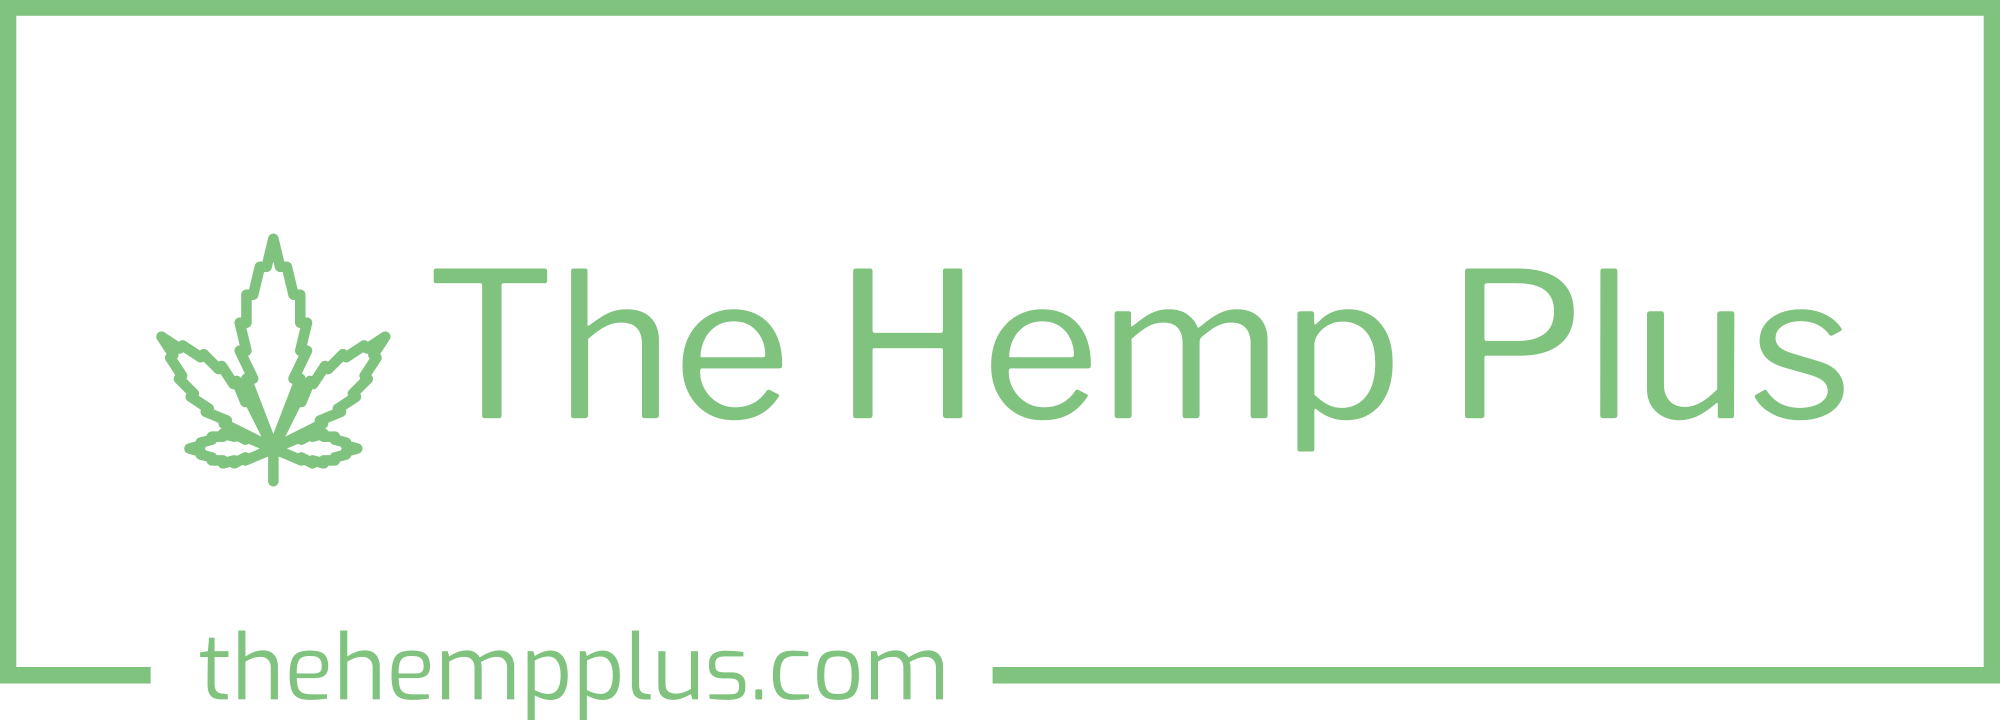 the-hemp-plus_logo